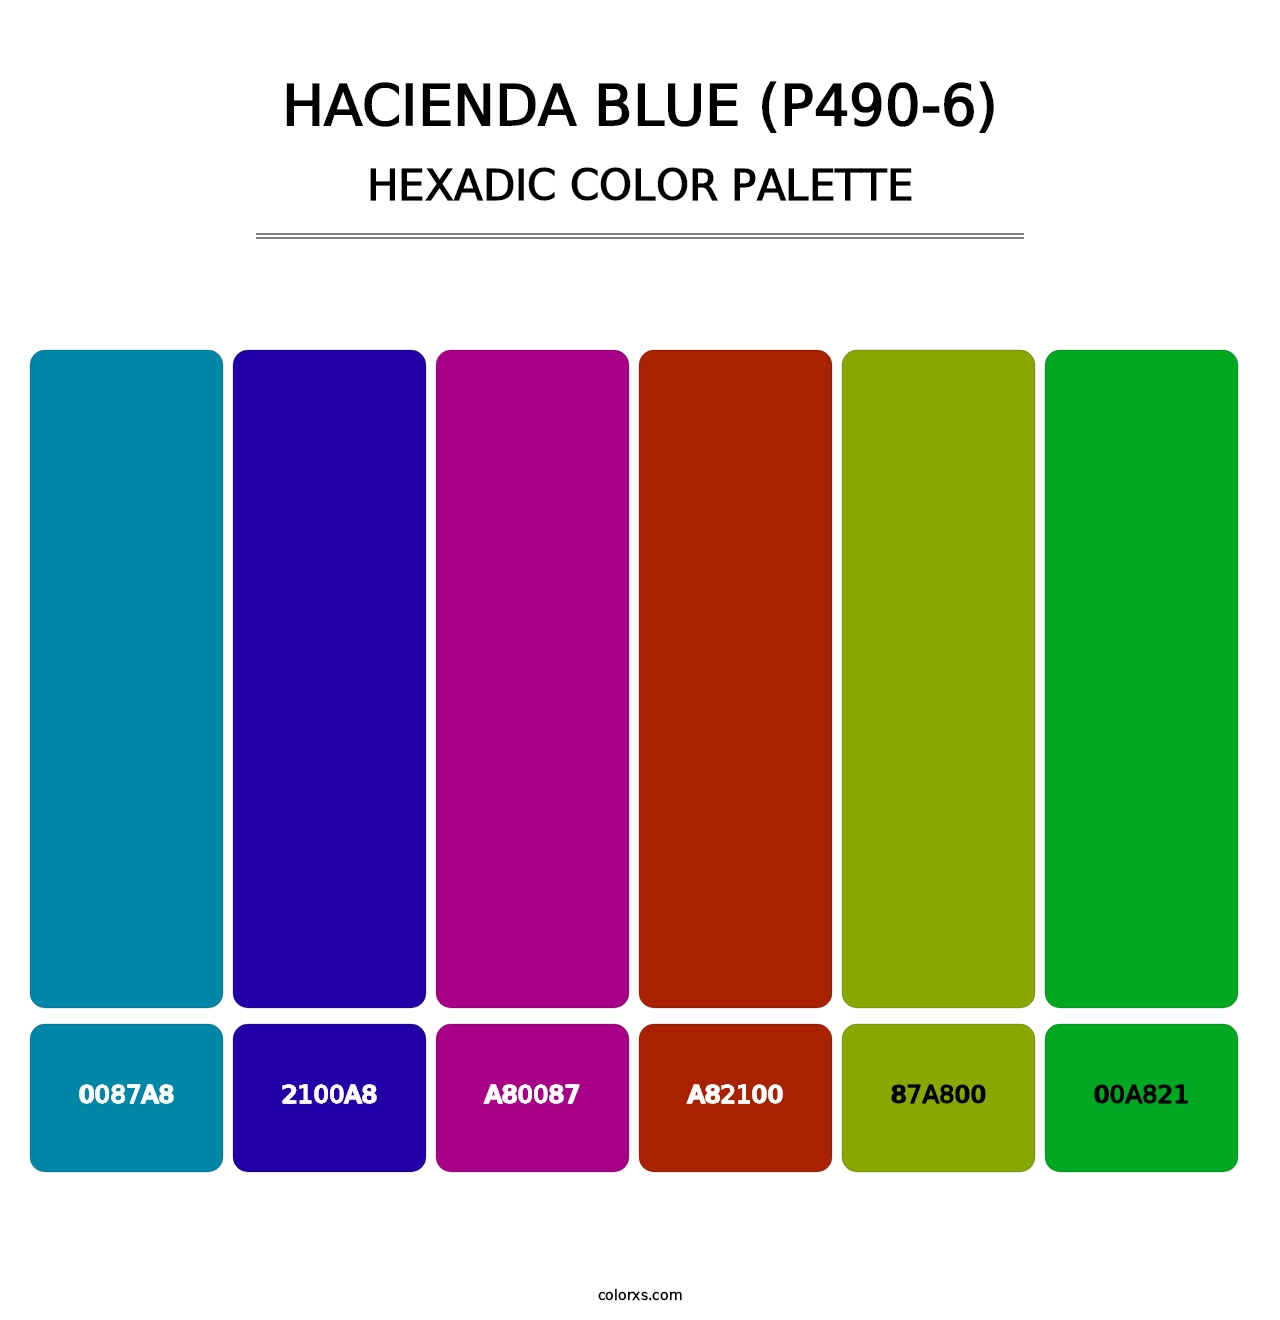 Hacienda Blue (P490-6) - Hexadic Color Palette